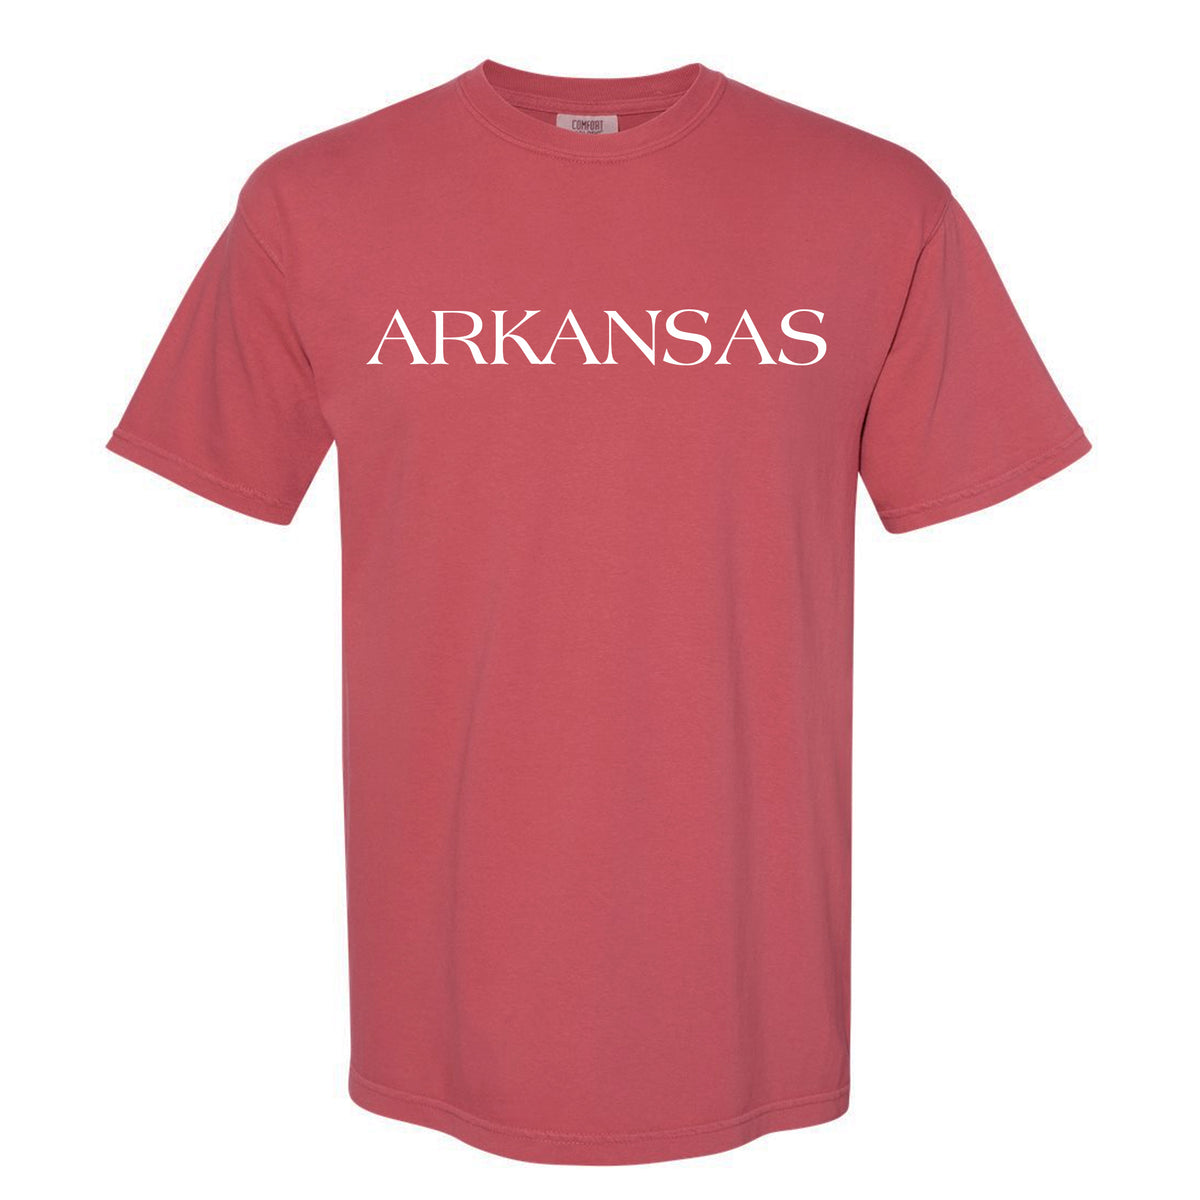 By The Sea Arkansas Crimson/White T-shirt